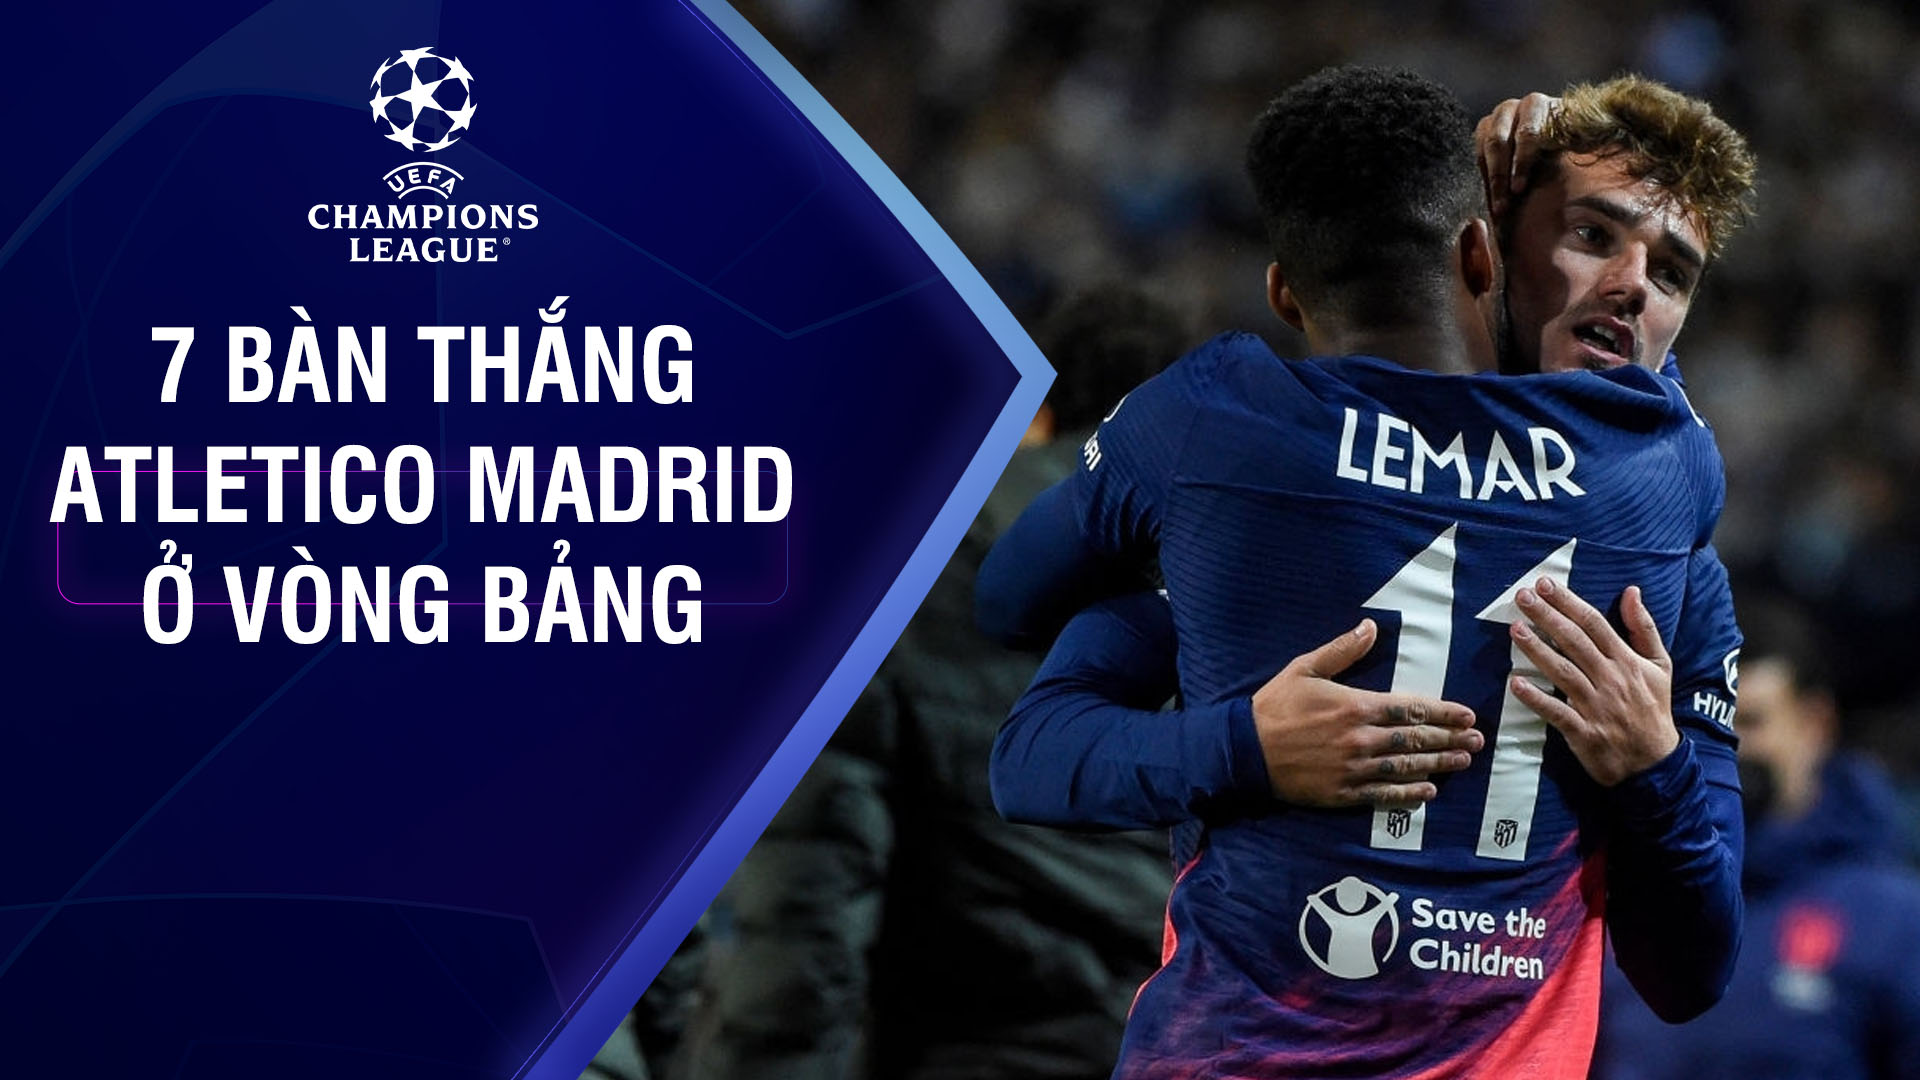 7 bàn thắng của Atletico Madrid ở vòng bảng - UEFA Champions League